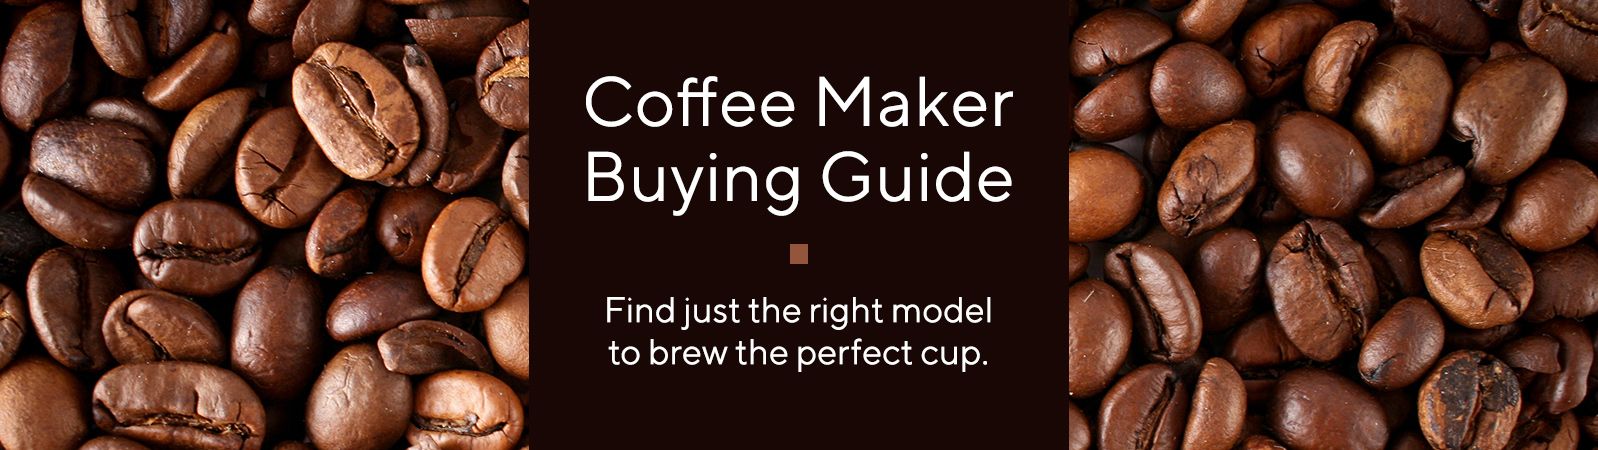 https://qvc.scene7.com/is/image/QVC/pic/cd/sq2_rsp_coffeemaker_20200303.jpg?ql=95,1